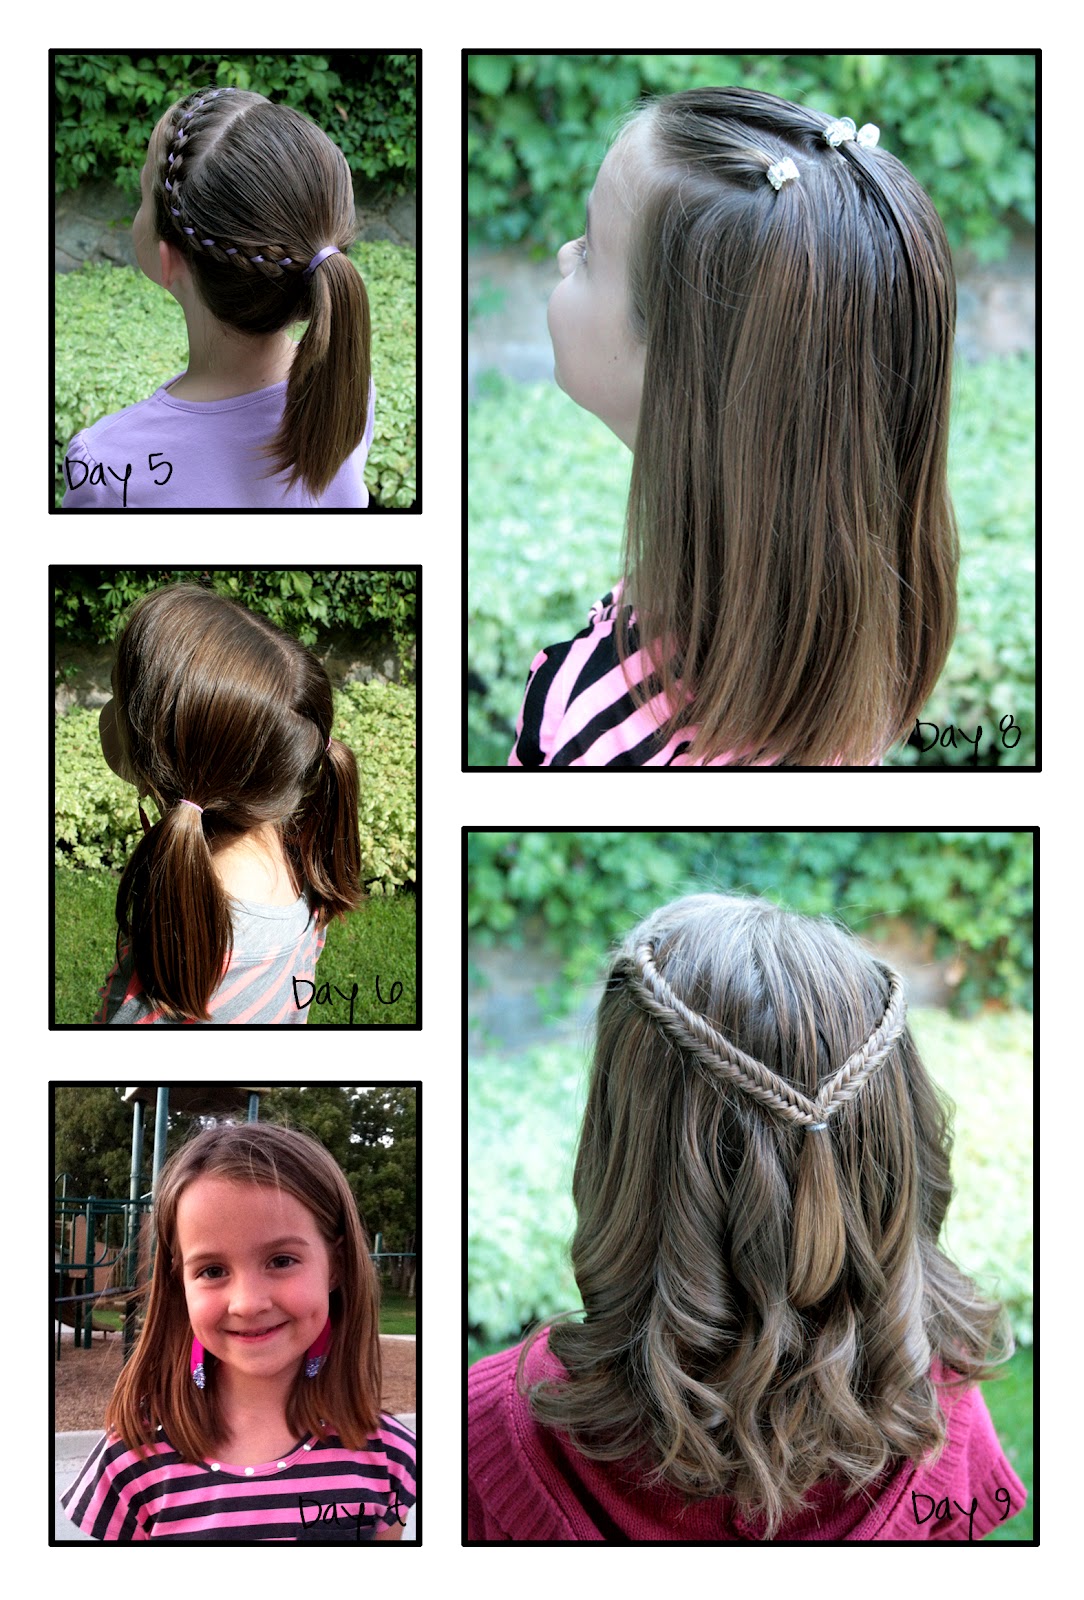 Girly Do Hairstyles: By Jenn: School Week 2